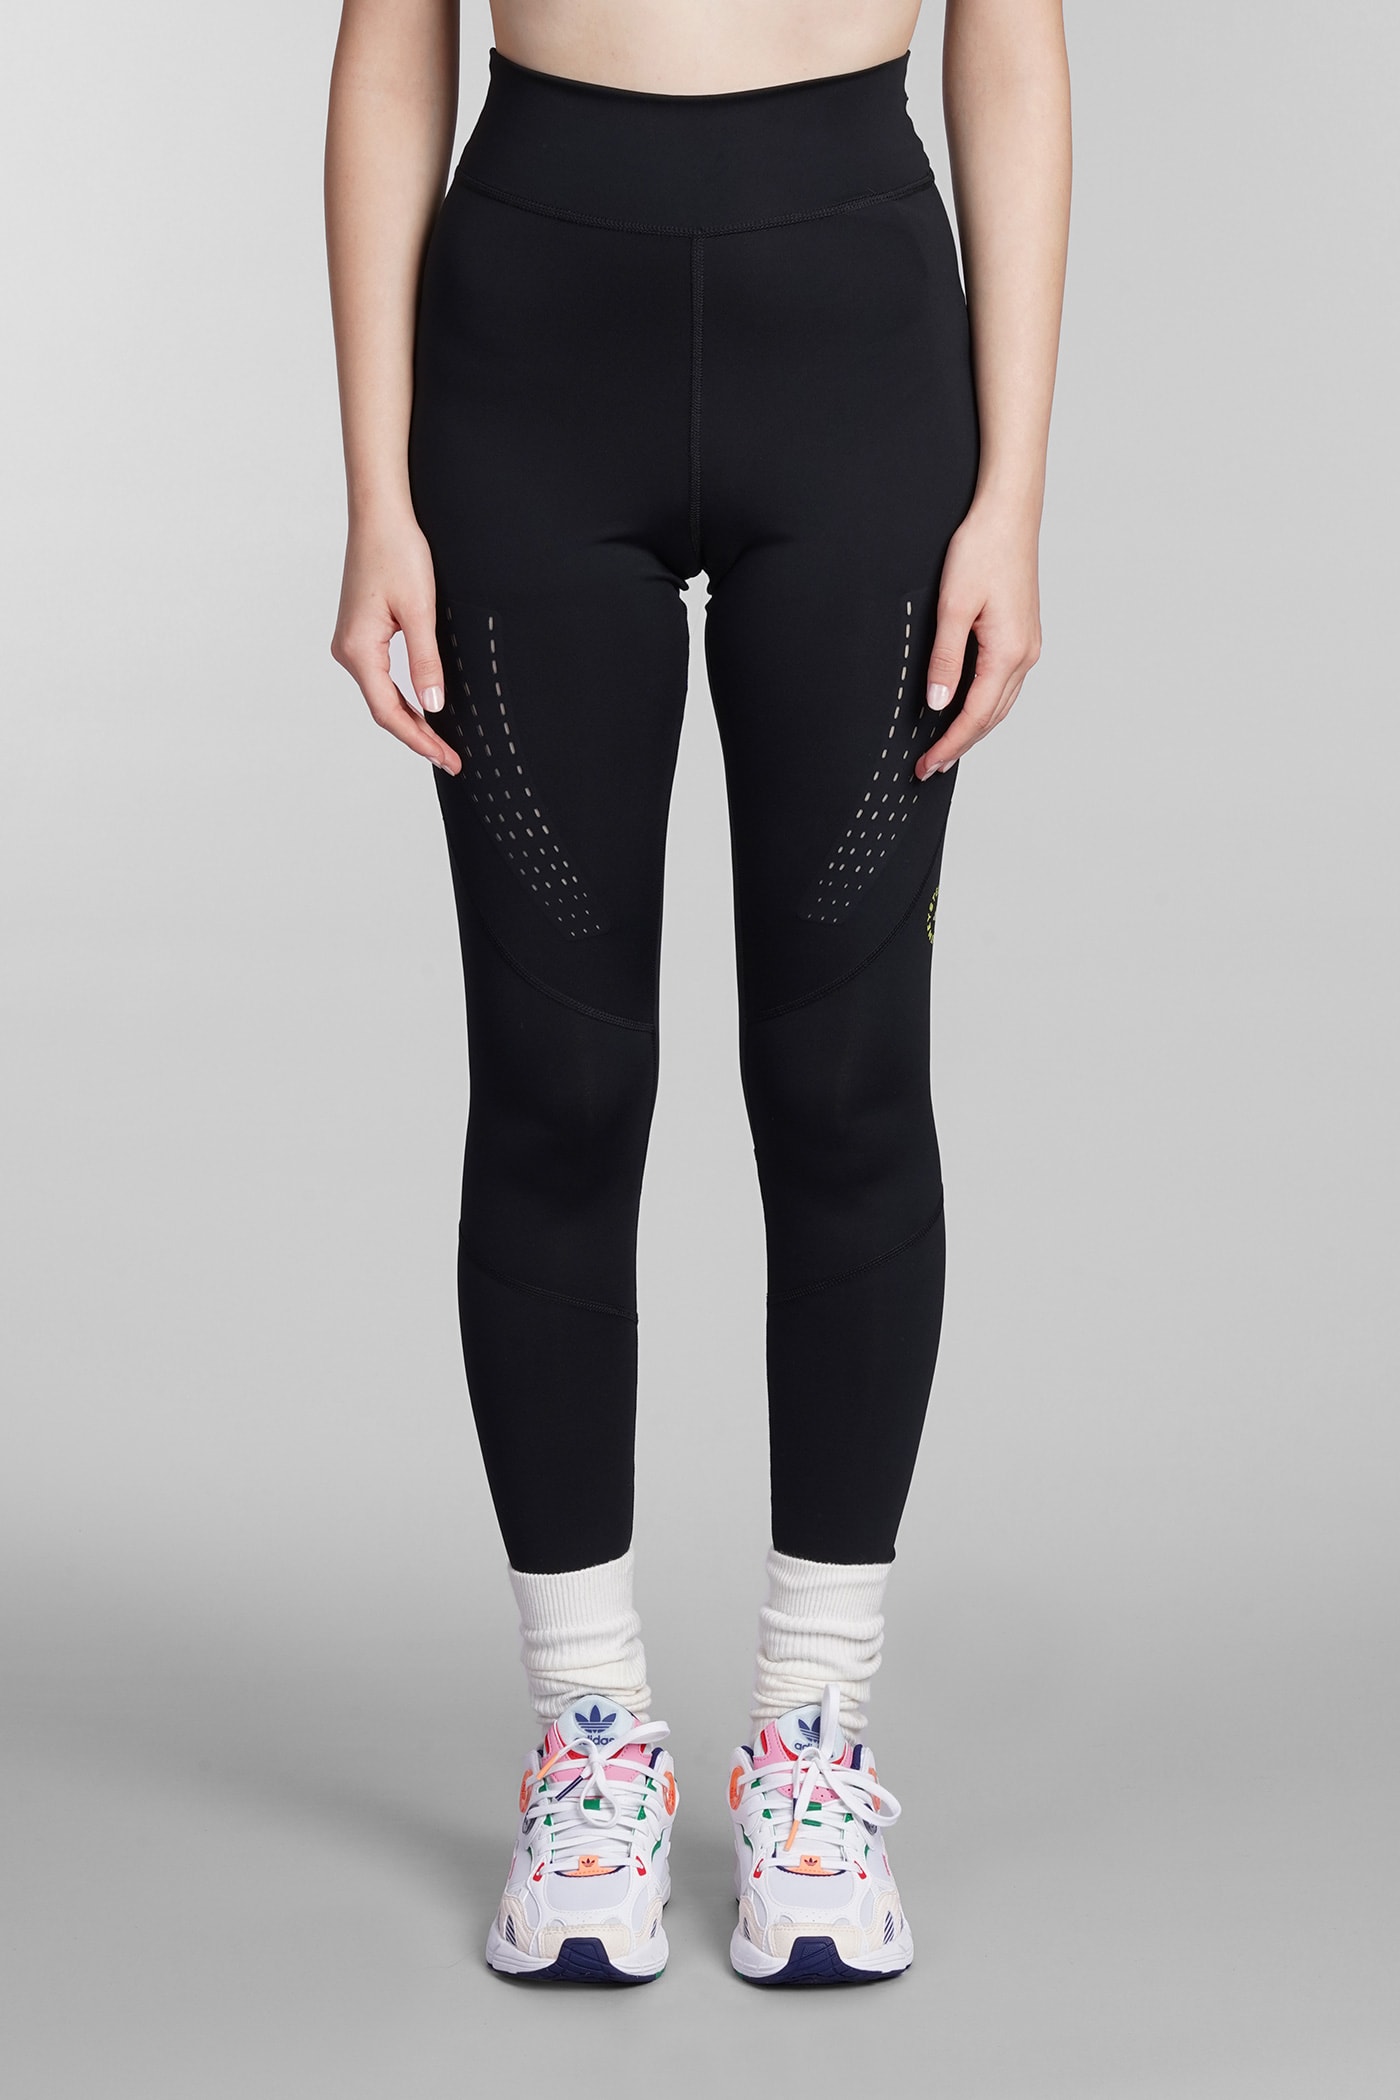 Adidas by Stella McCartney Leggings In Black Synthetic Fibers